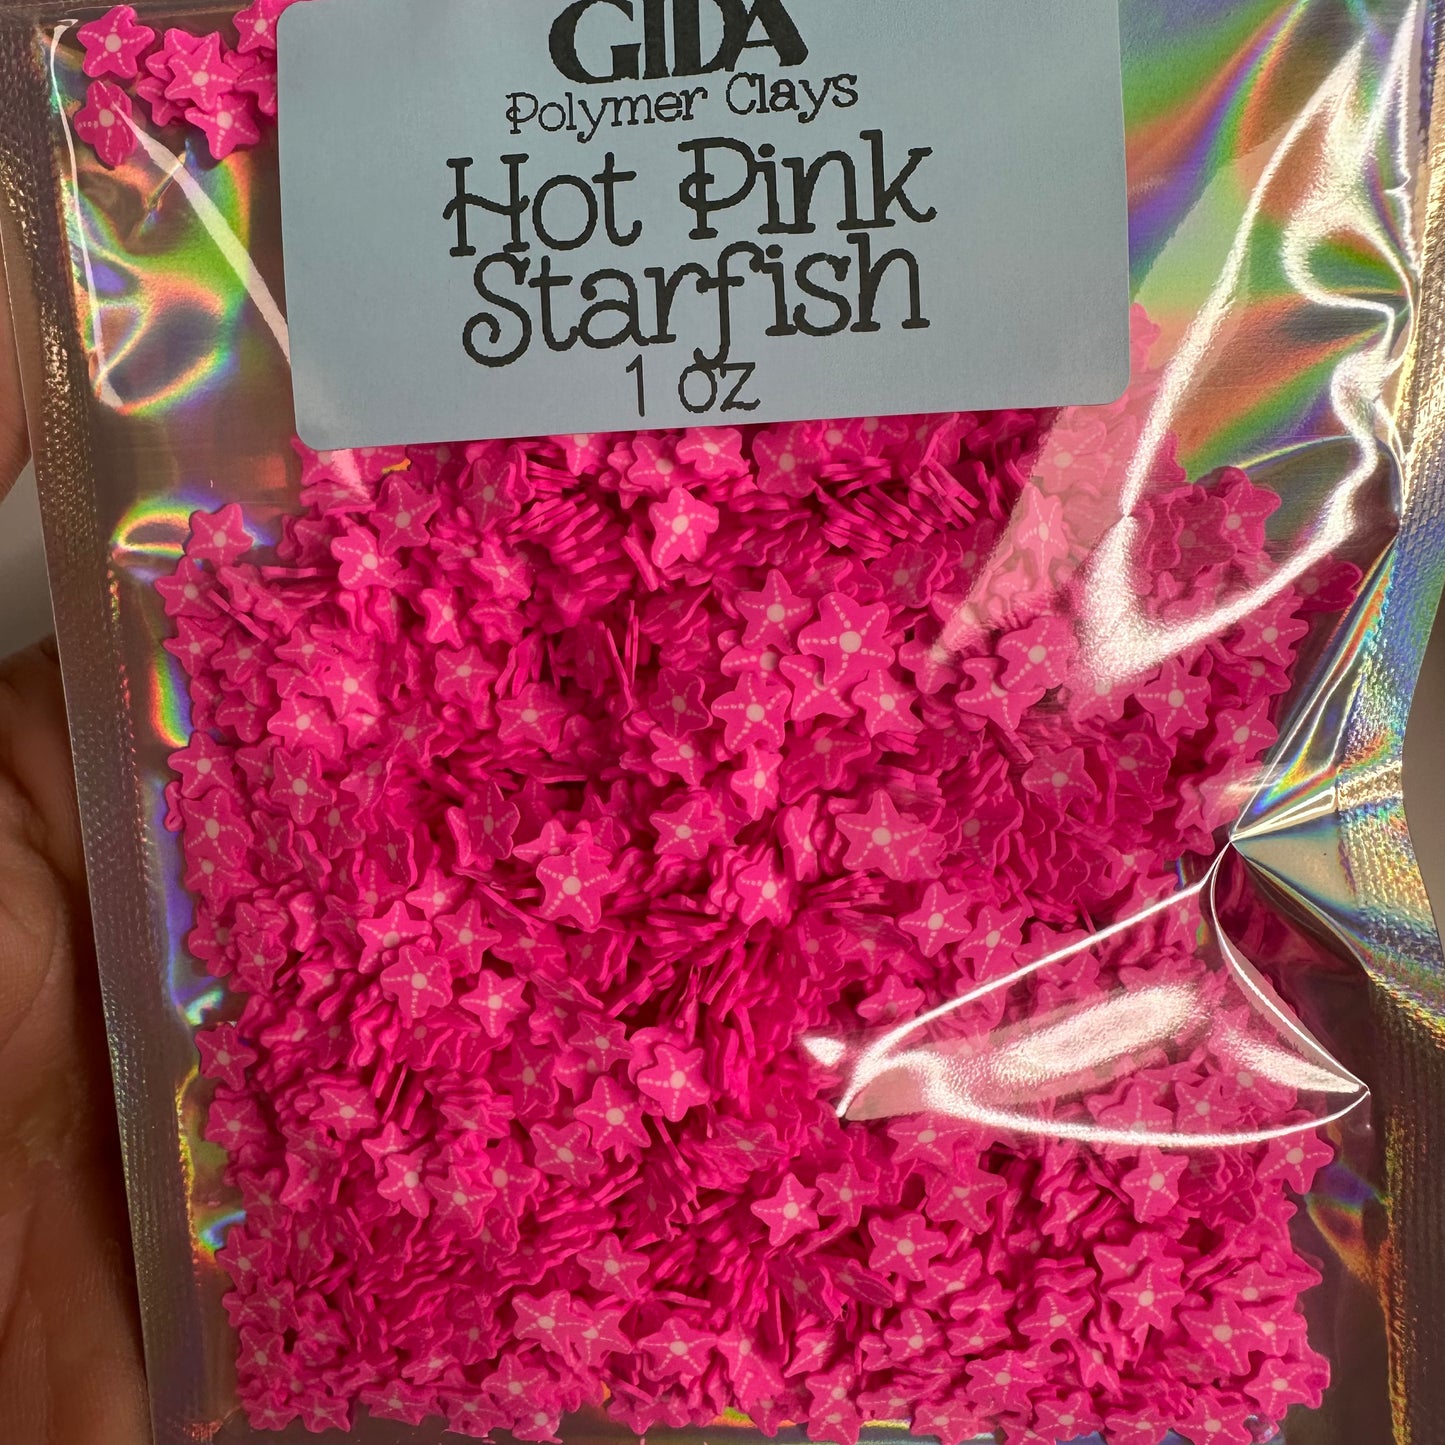 Hot Pink Starfish - Polymer clay 1 oz